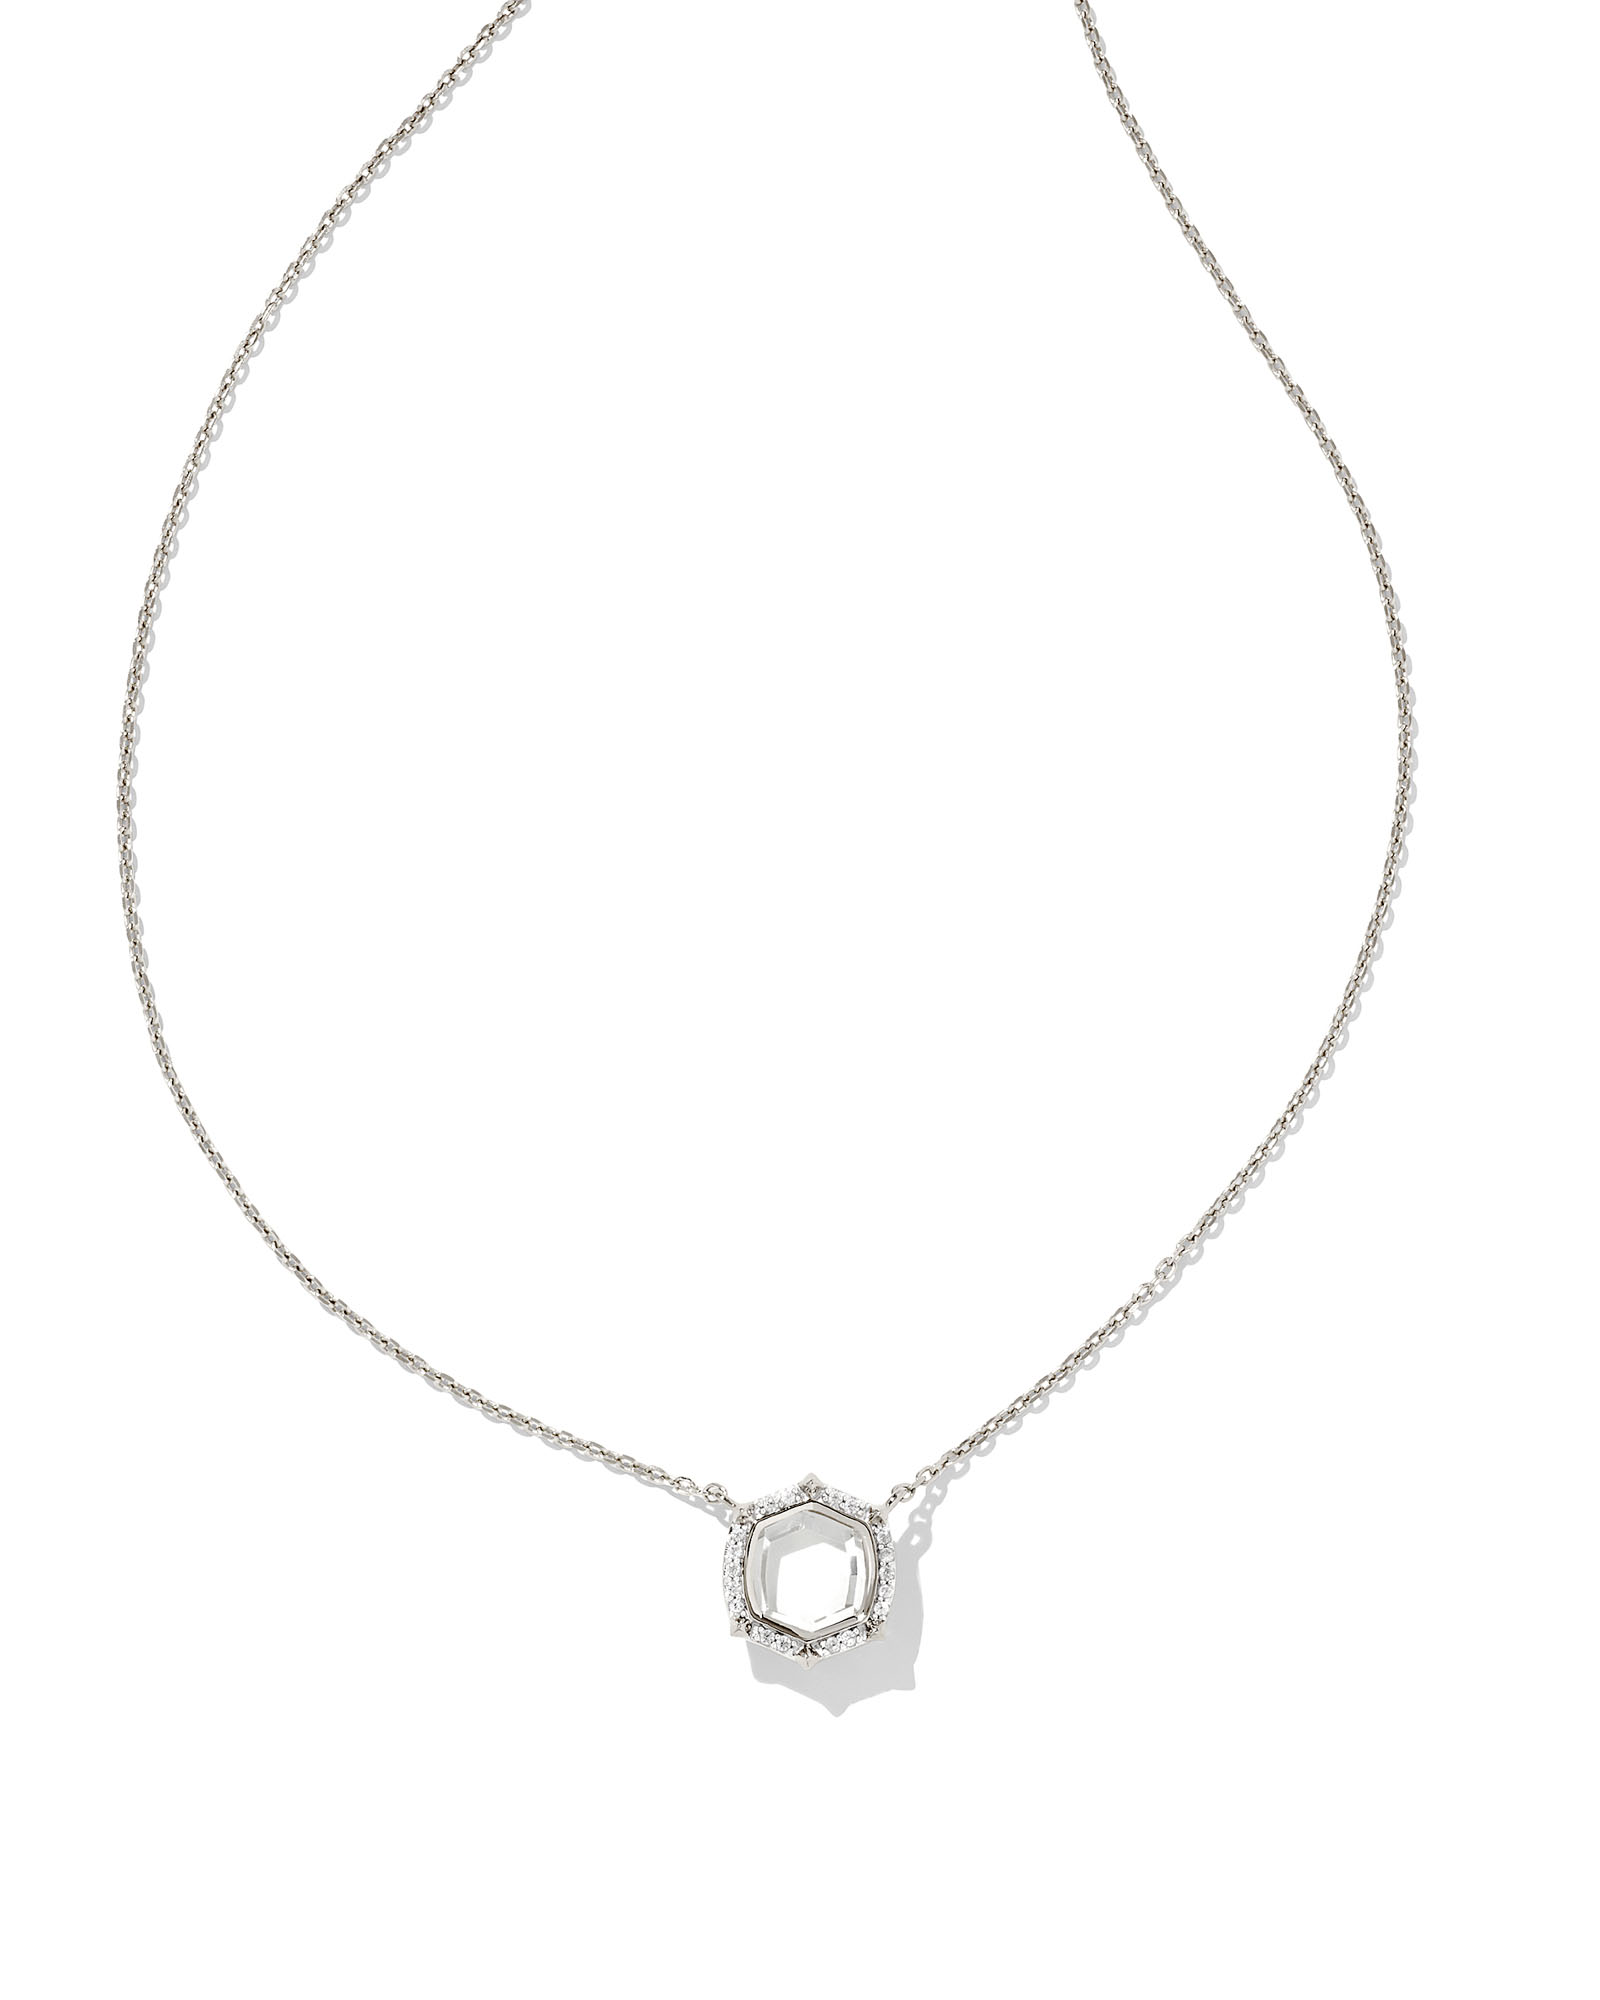 Classic Gigi Sapphire necklace, White Gold, 16.5